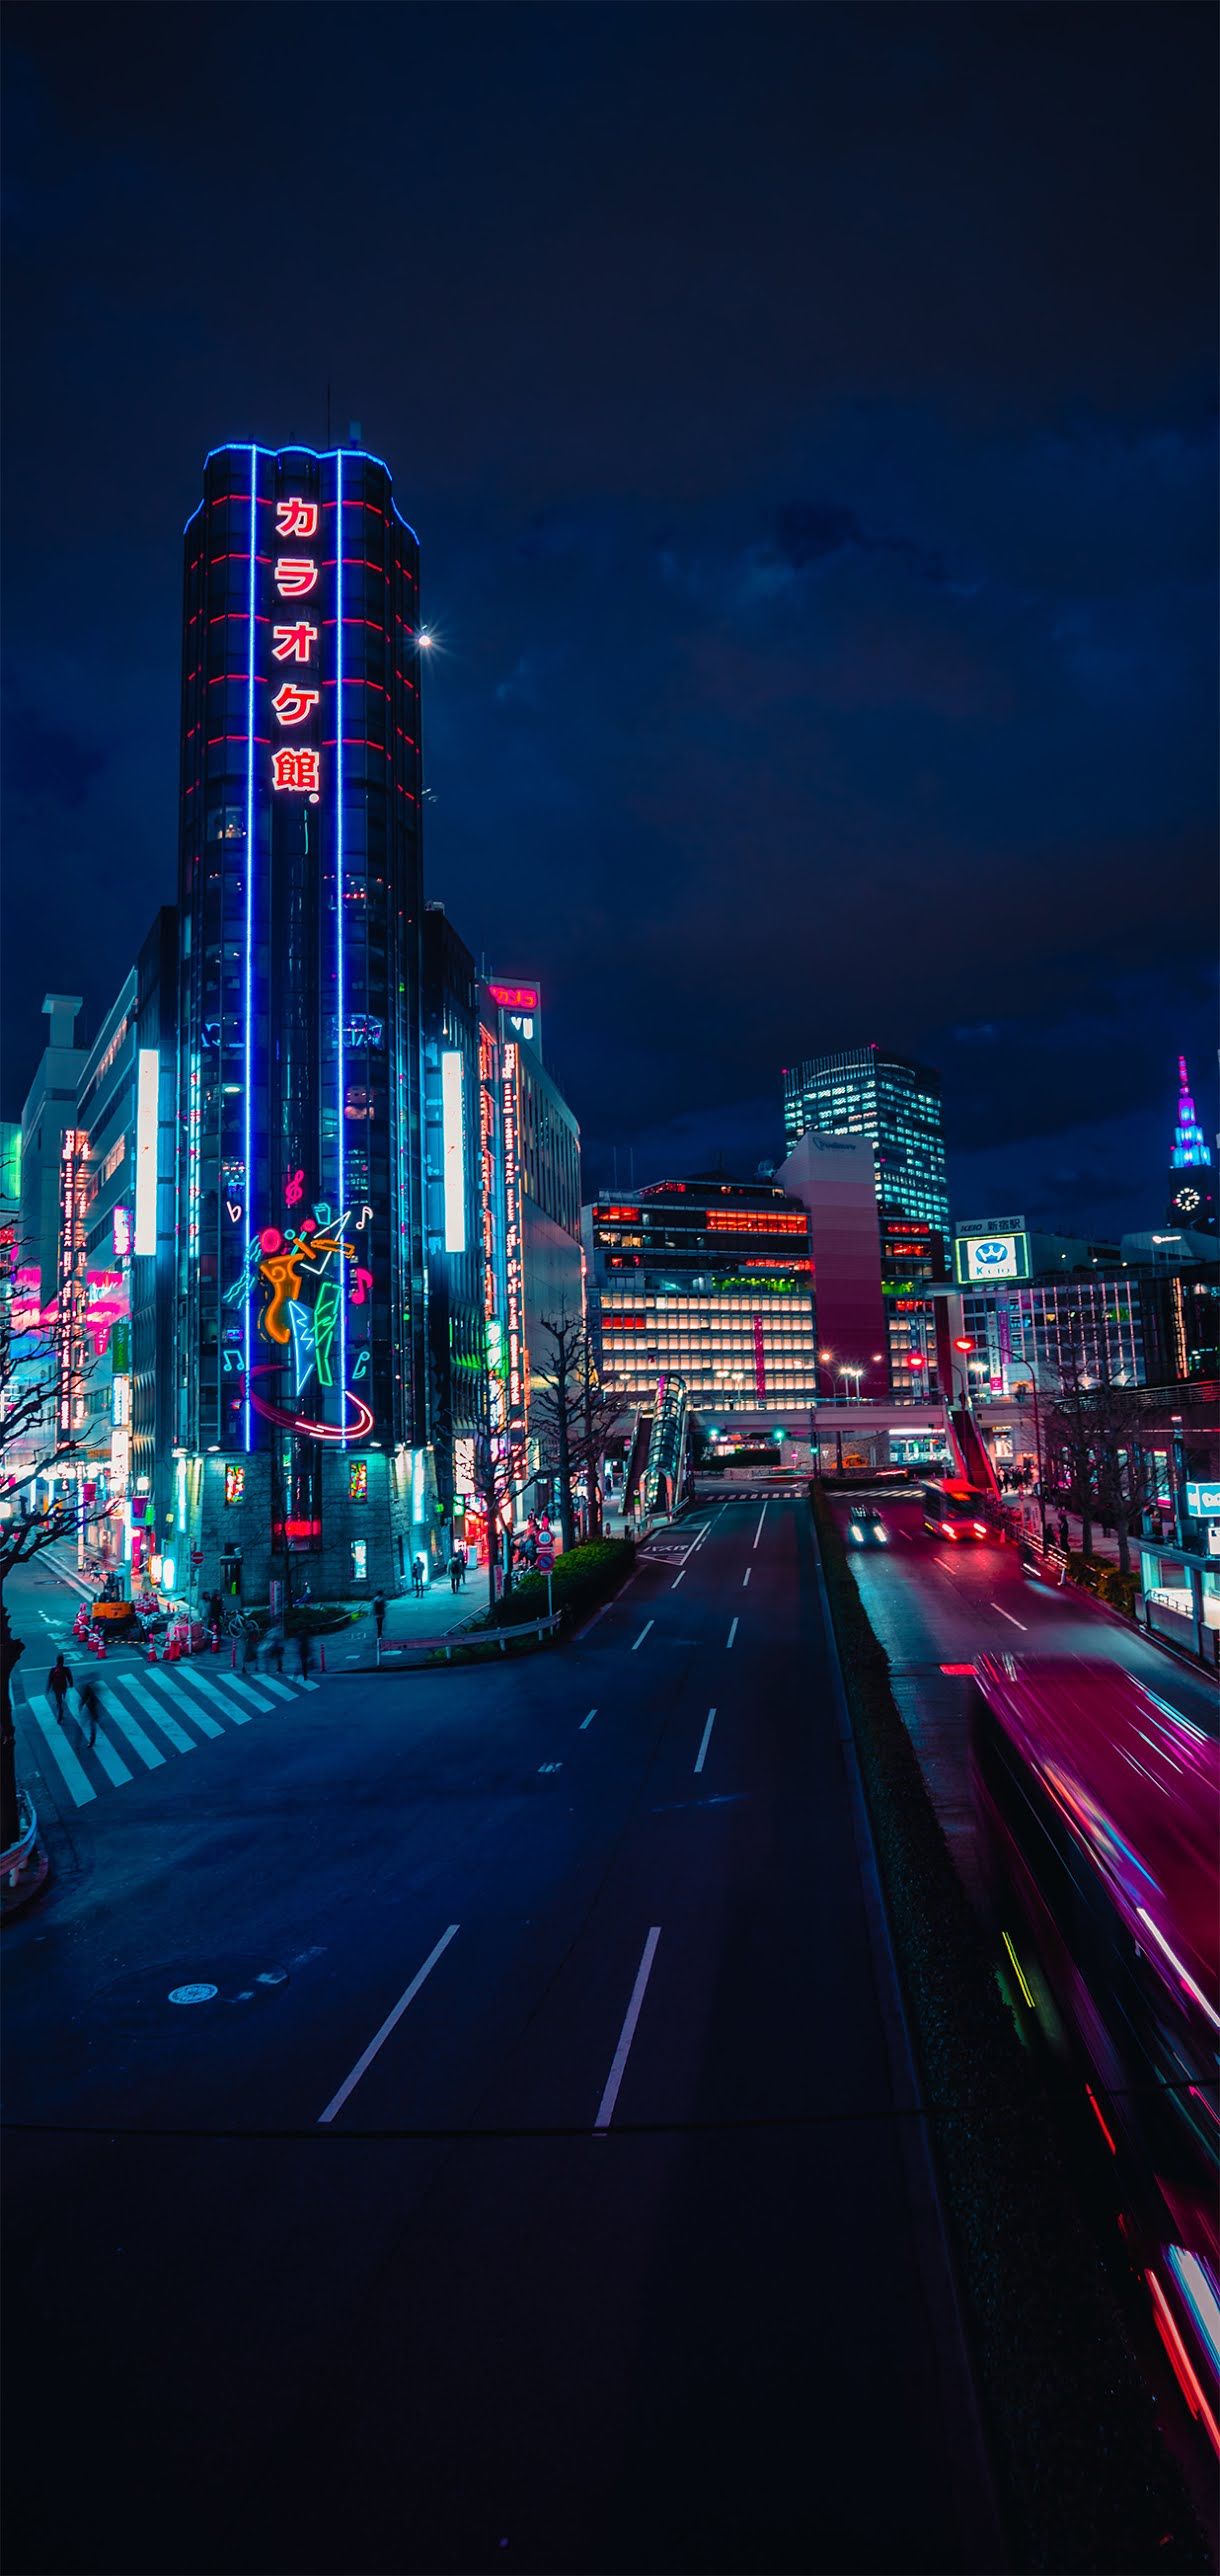 TOKYO NIGHT WALLPAPER FOR PHONE